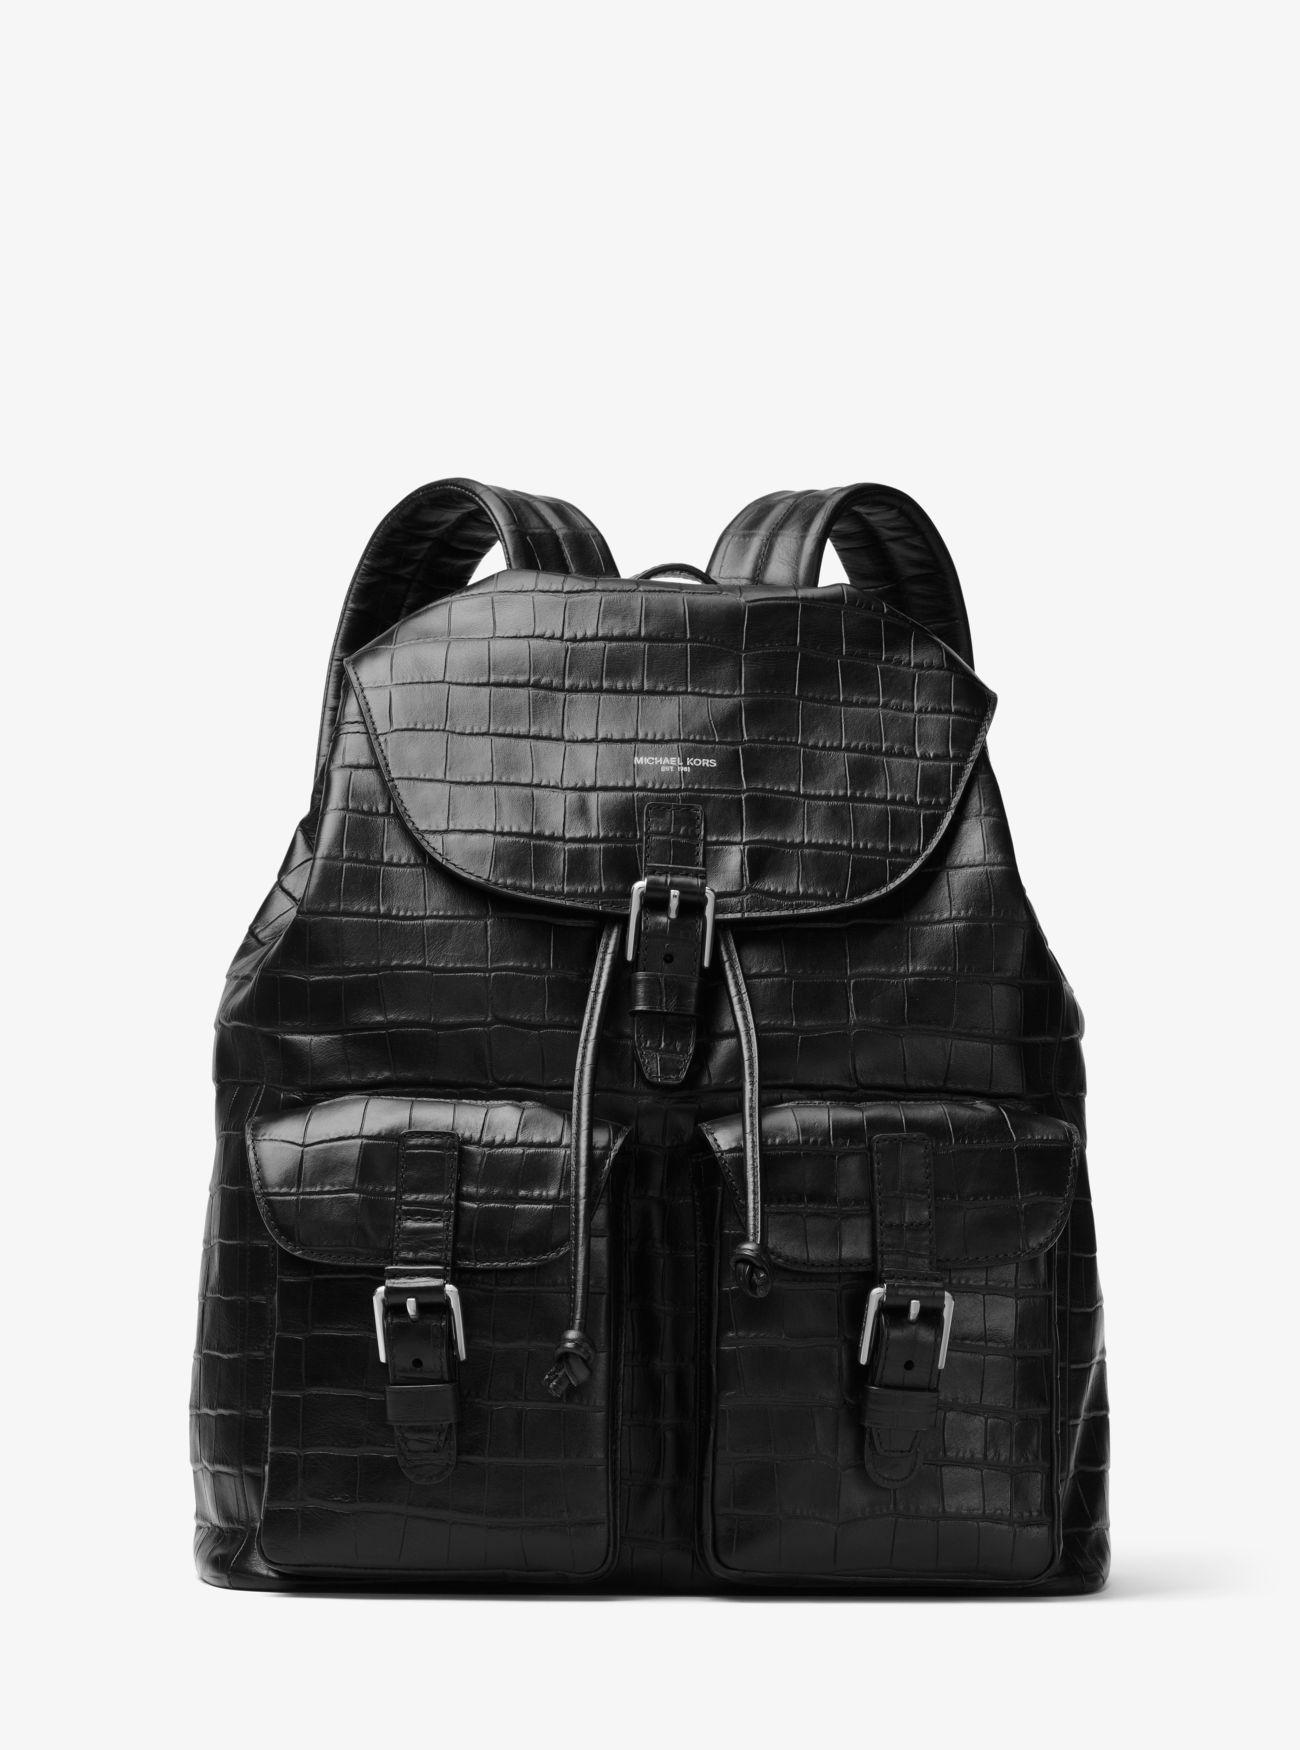 Michael Kors Bryant Embossed-leather Backpack in Black for Men - Lyst